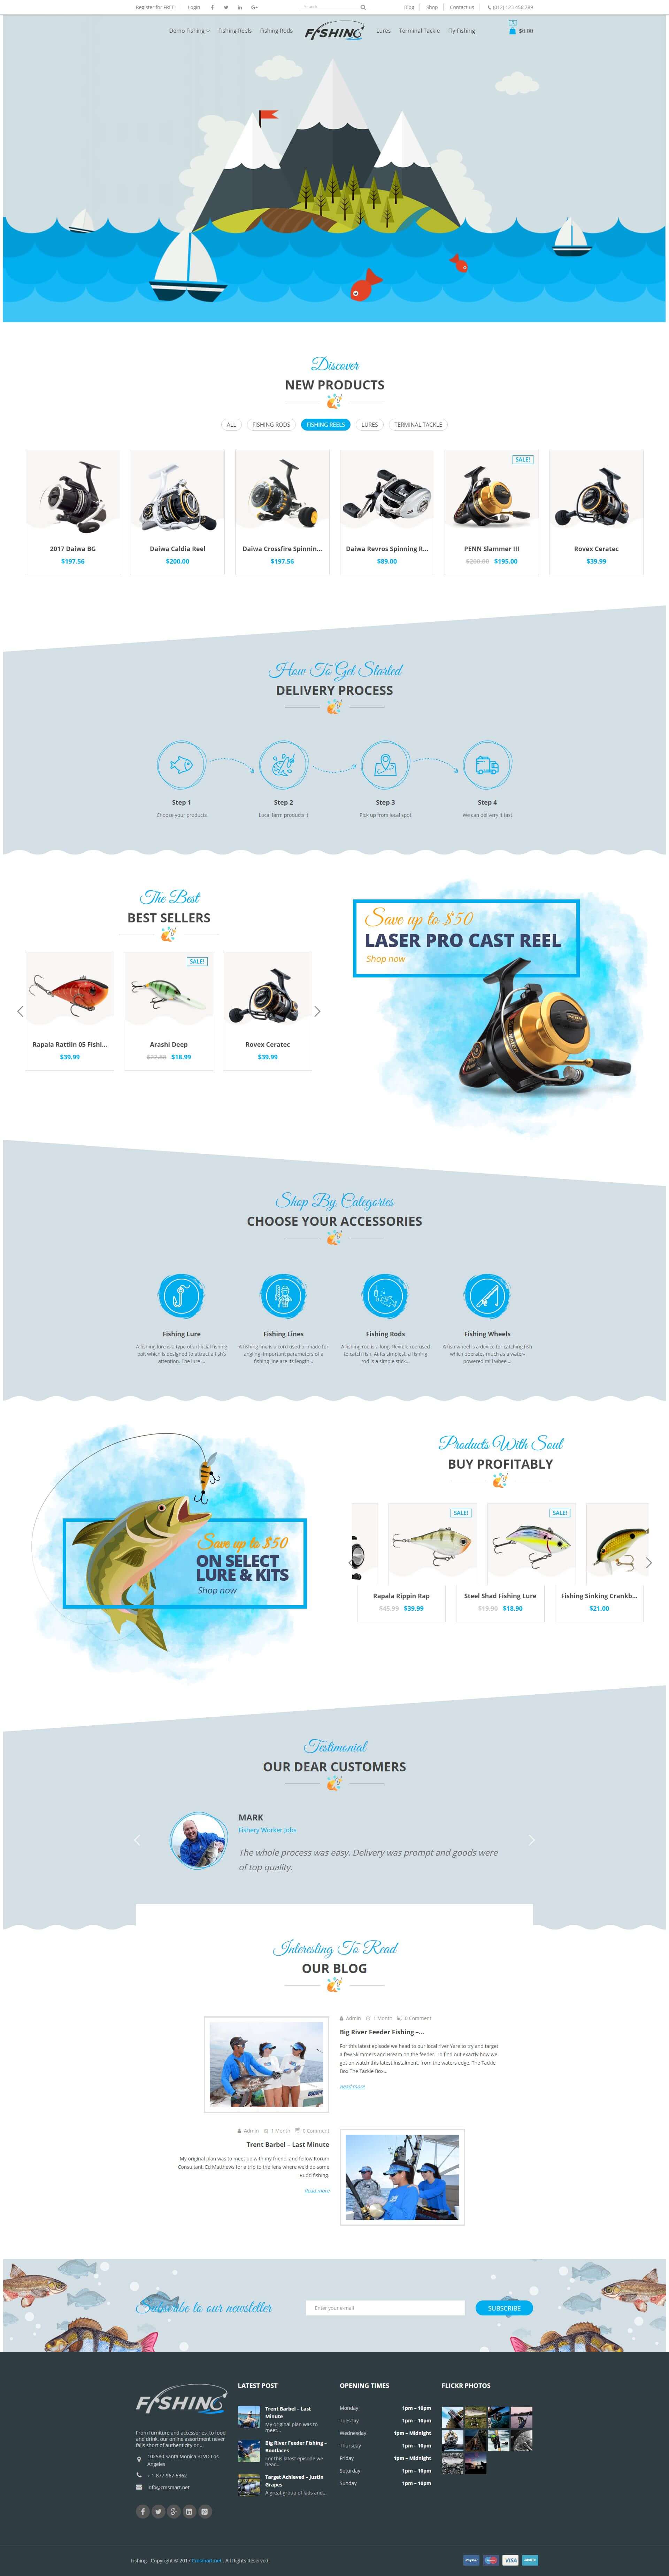 Shopping Smart for Fishing Gear - The Fishing Website